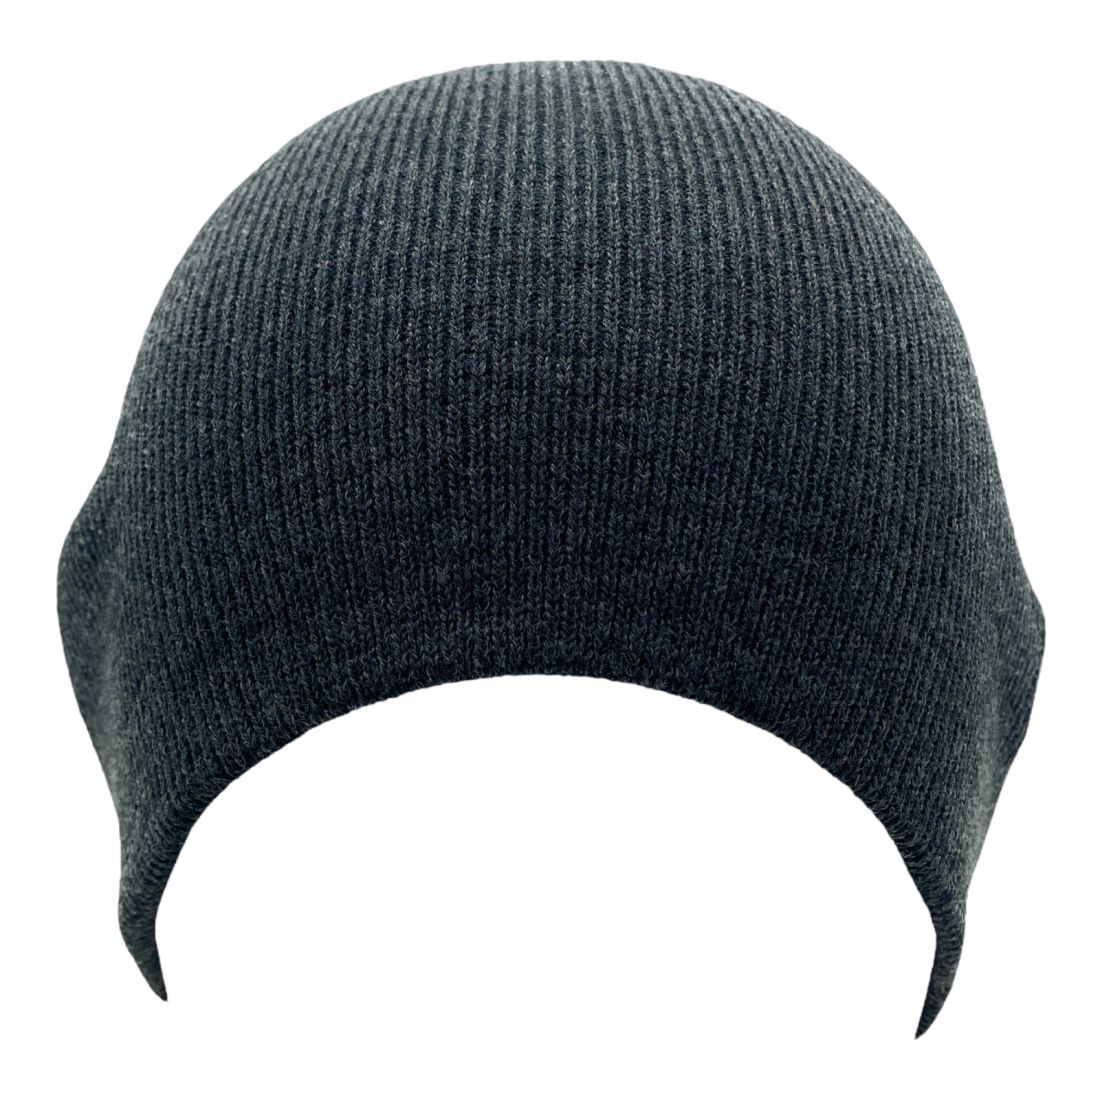 Empire Cove Knit Uncuffed Beanie Hat Cap Warm Winter Men Women Short T